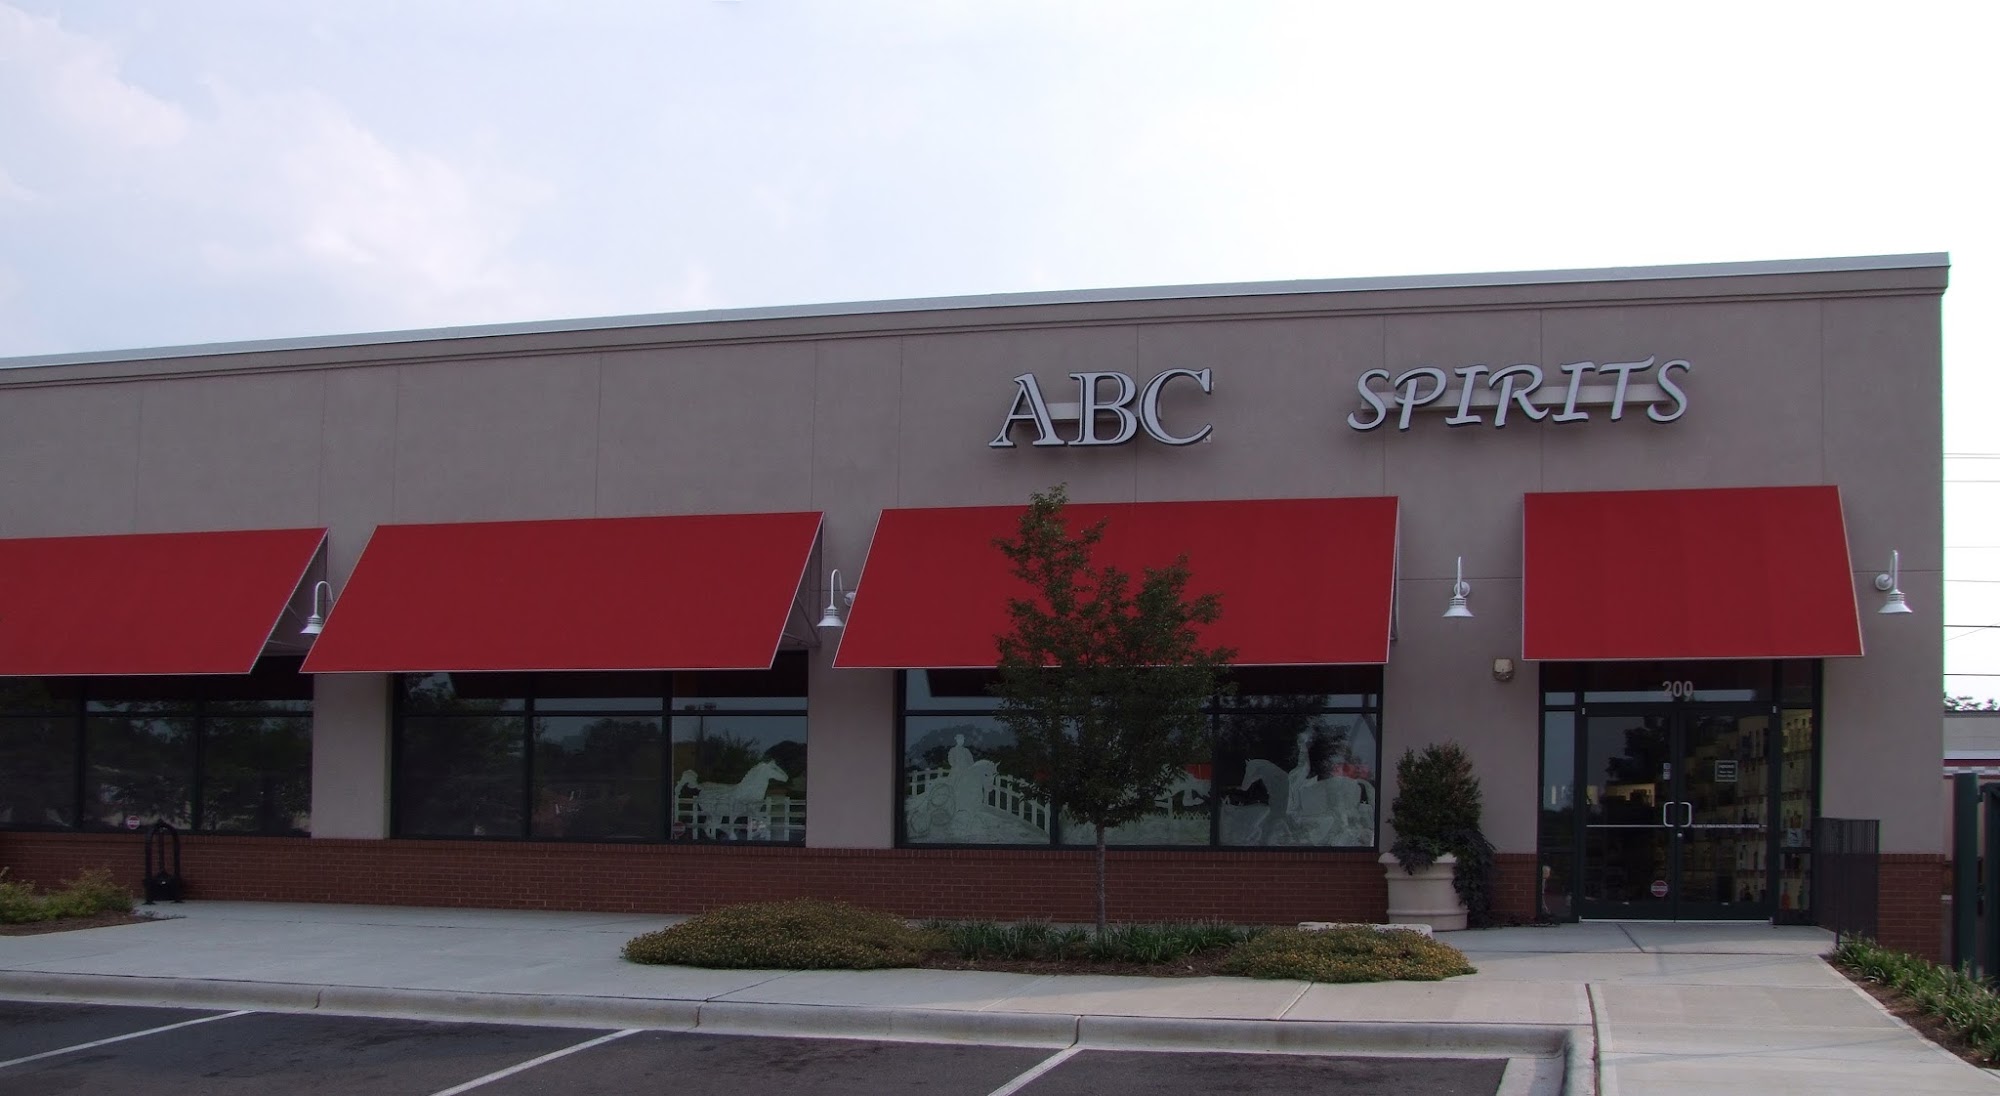 Mecklenburg County ABC Store #25